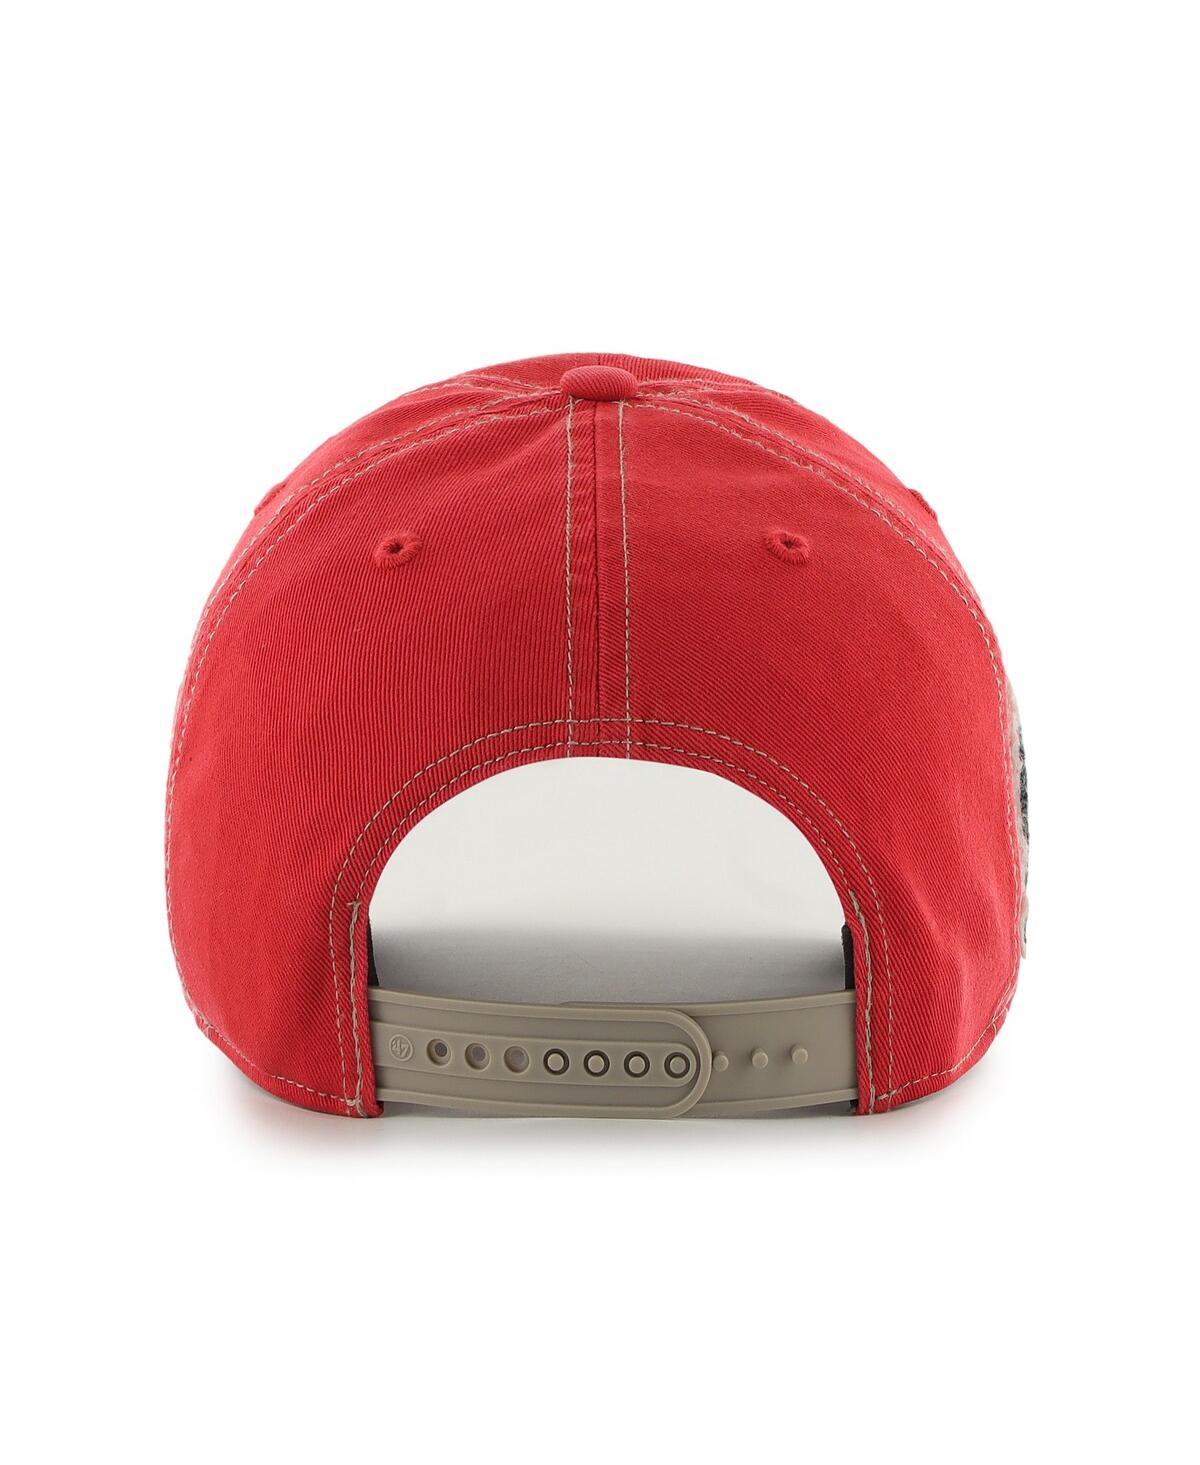 Shop 47 Brand Men's ' Red St. Louis Cardinals Hard Count Clean Up Adjustable Hat